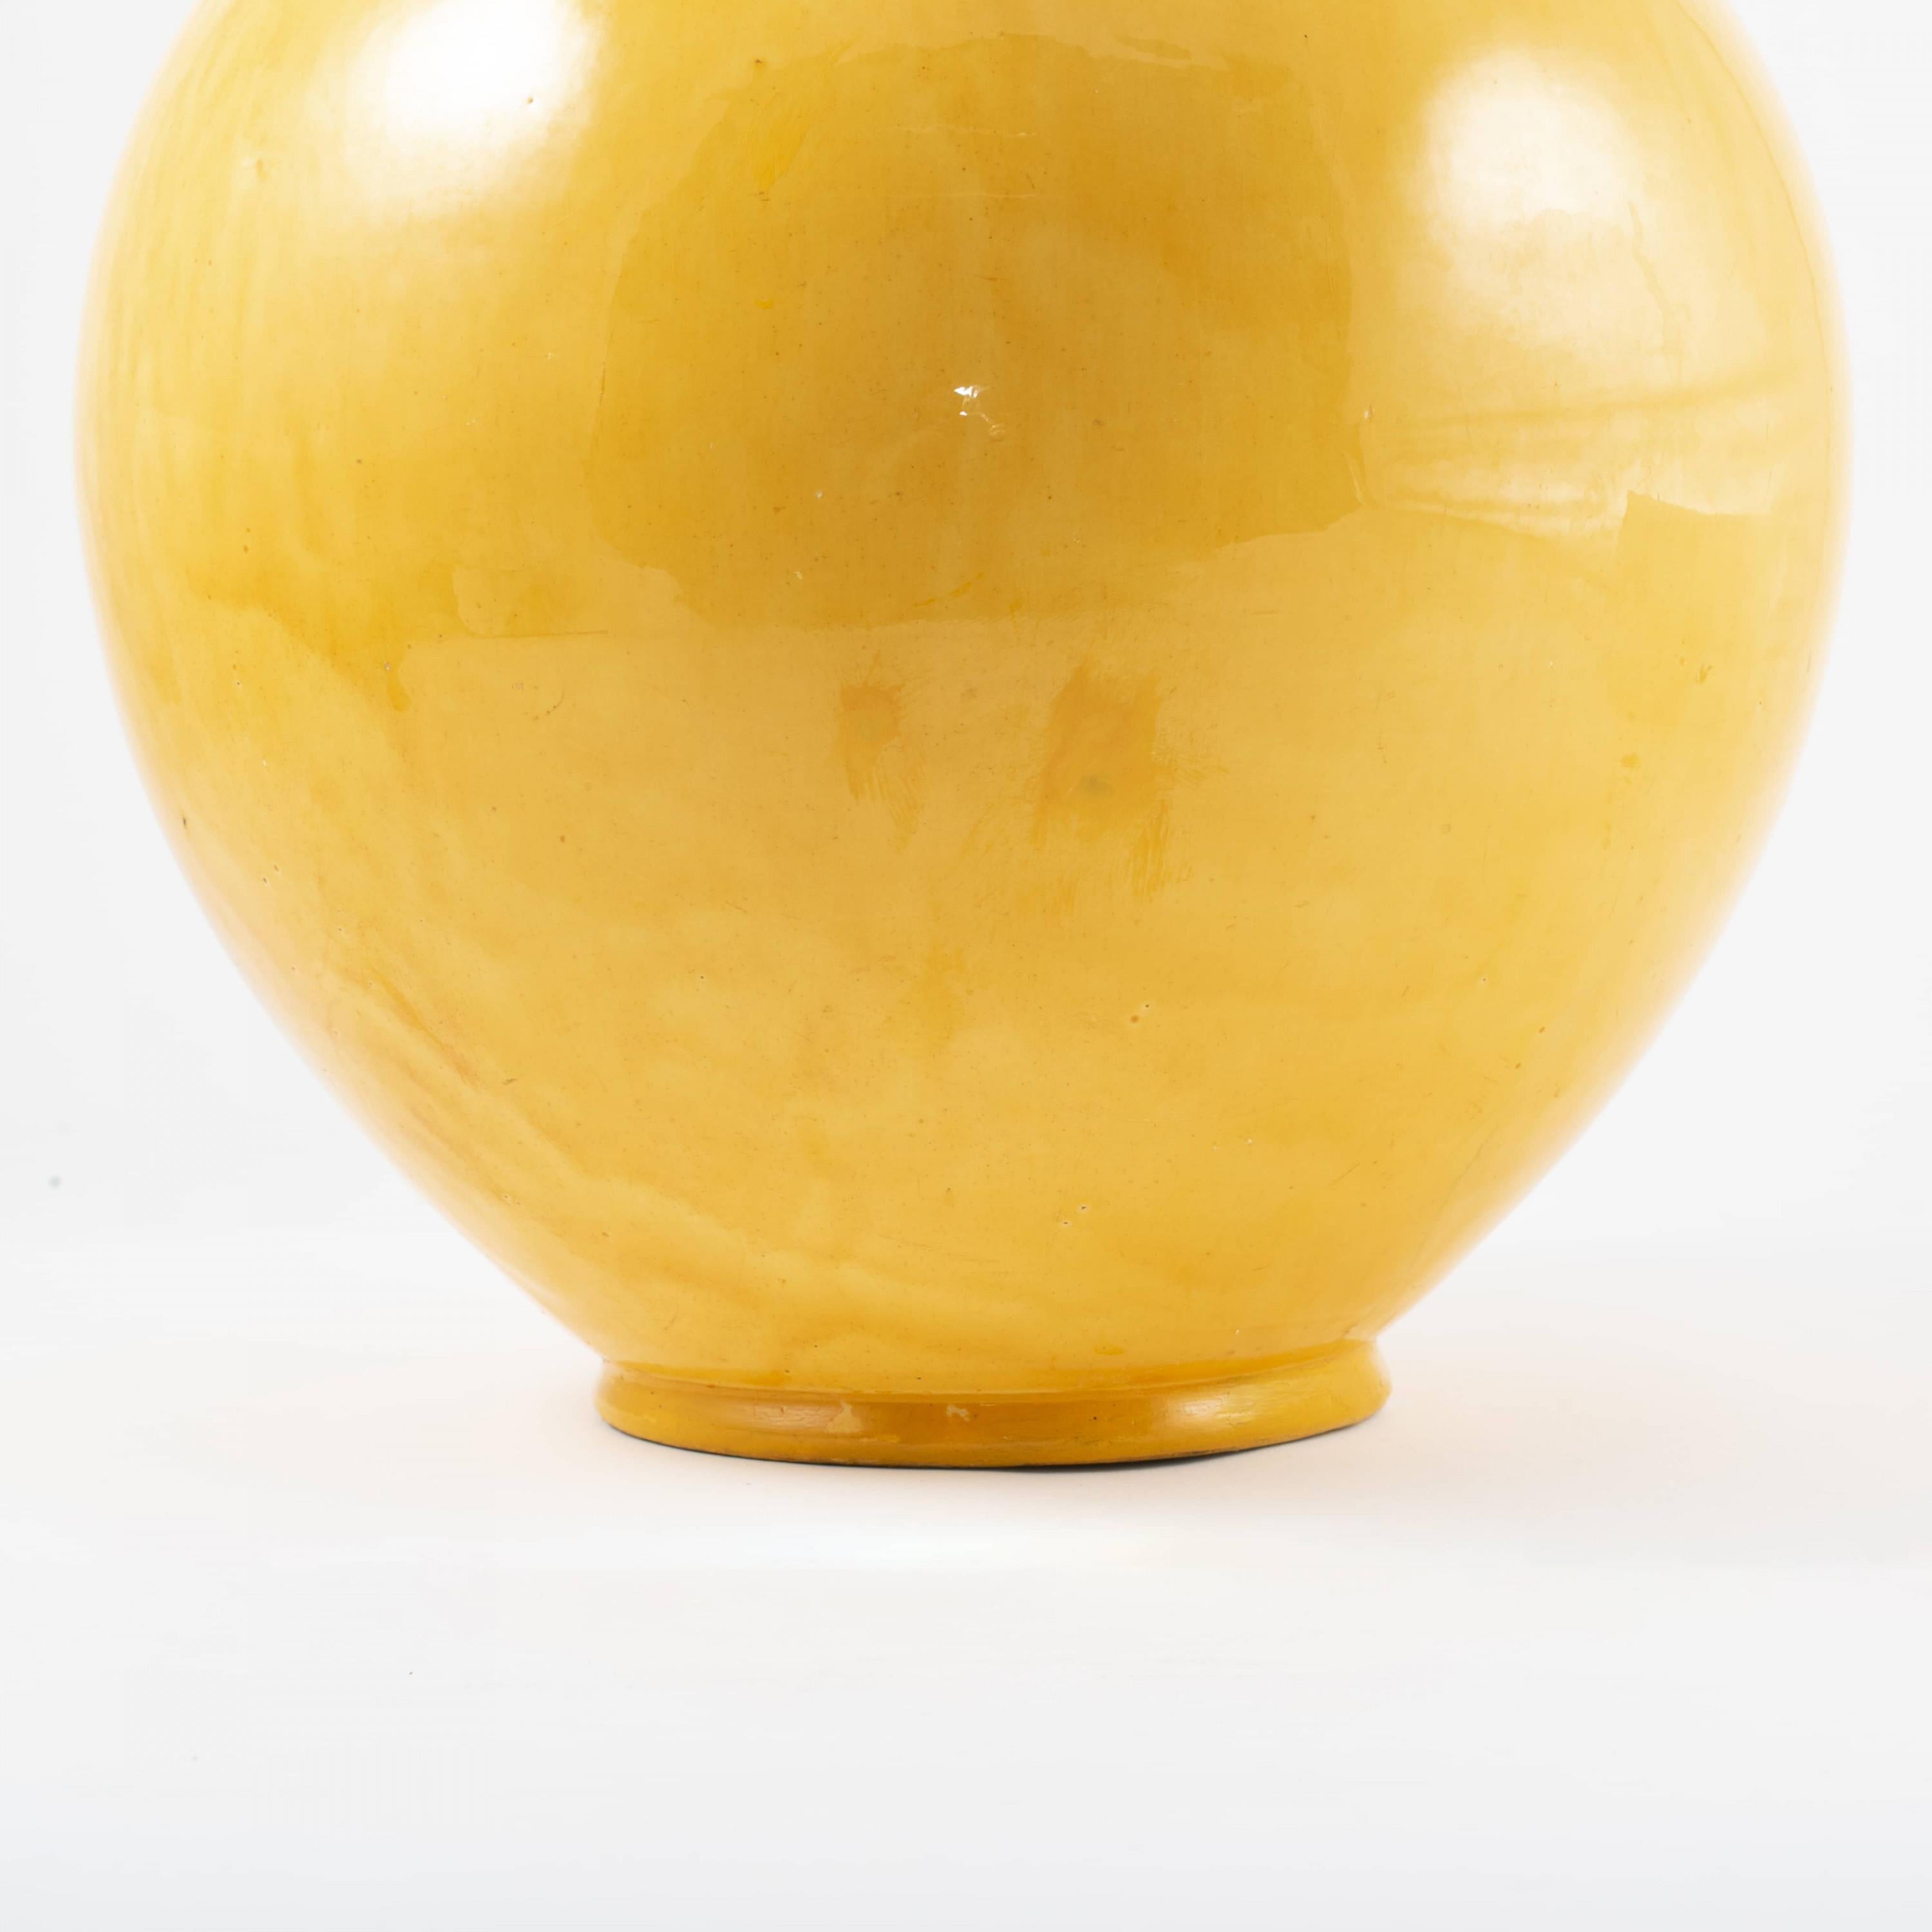 Kähler ceramic vase decorated with yellow glaze.
Signed HAK. Denmark. Herman A. Kähler.
Produced by Kähler's ceramic factory in Næstved c. 1920-1930.
    